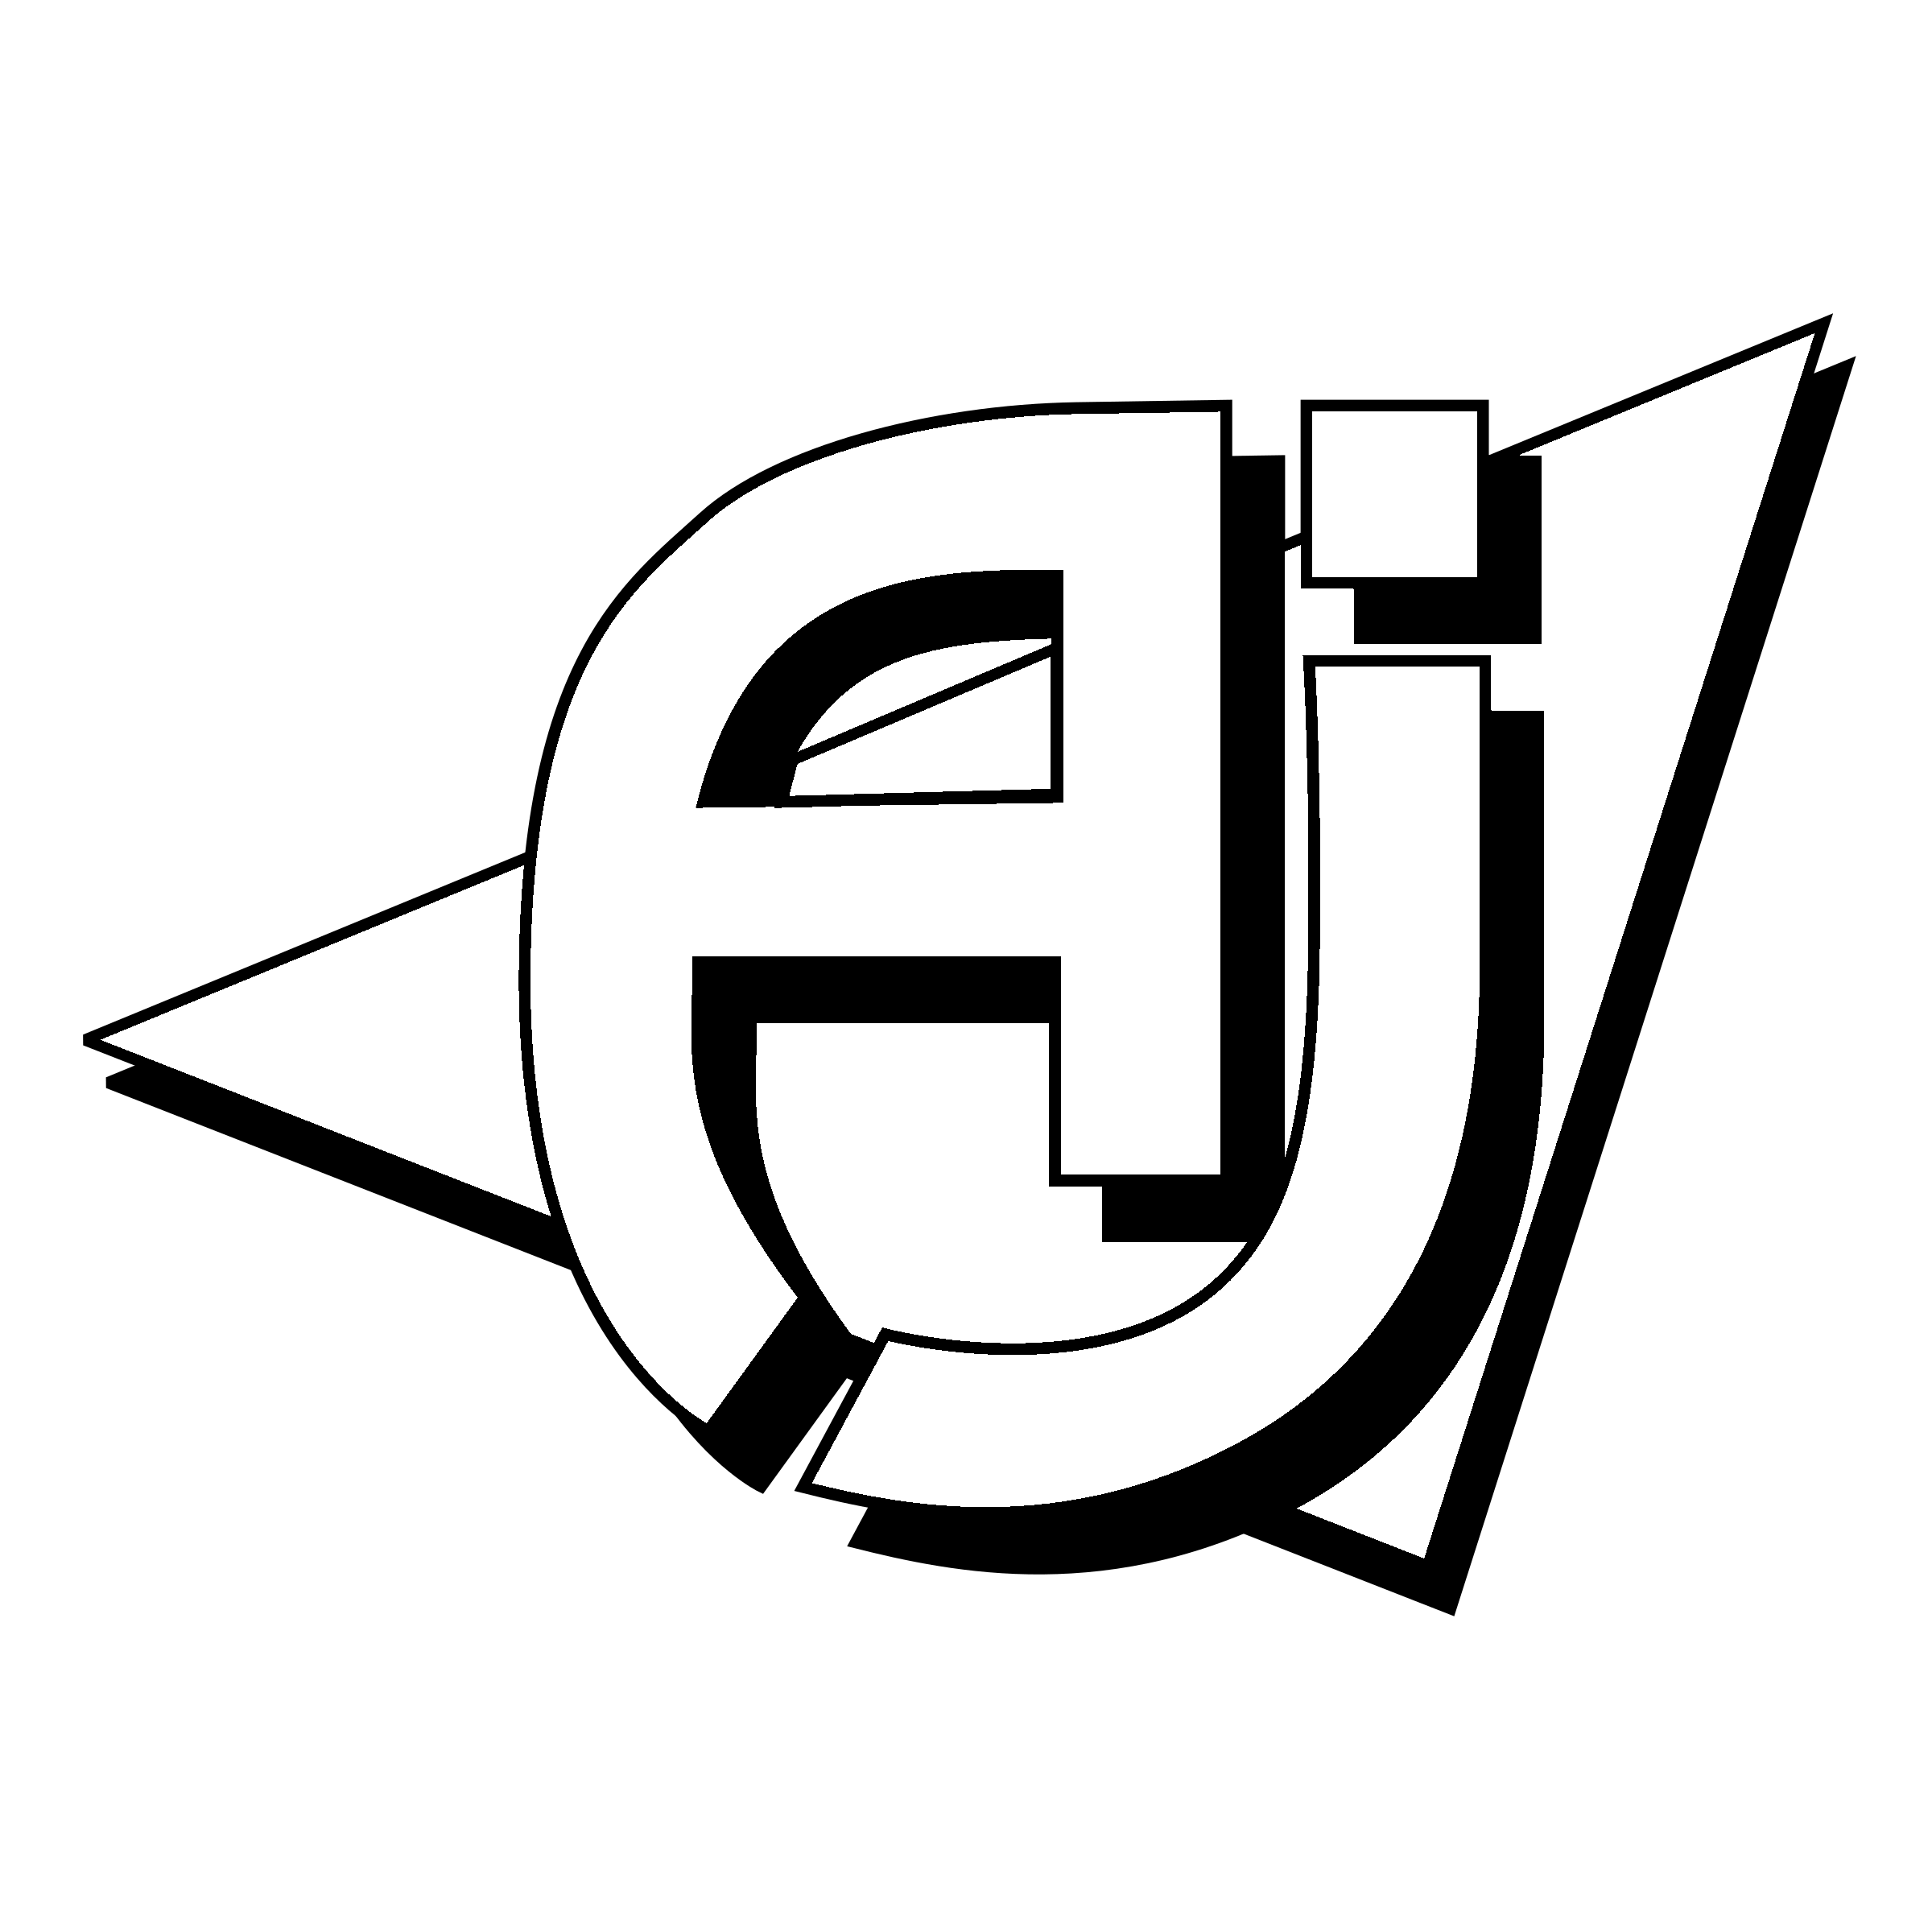 AJ Logo - AJ 01 Logo PNG Transparent & SVG Vector - Freebie Supply